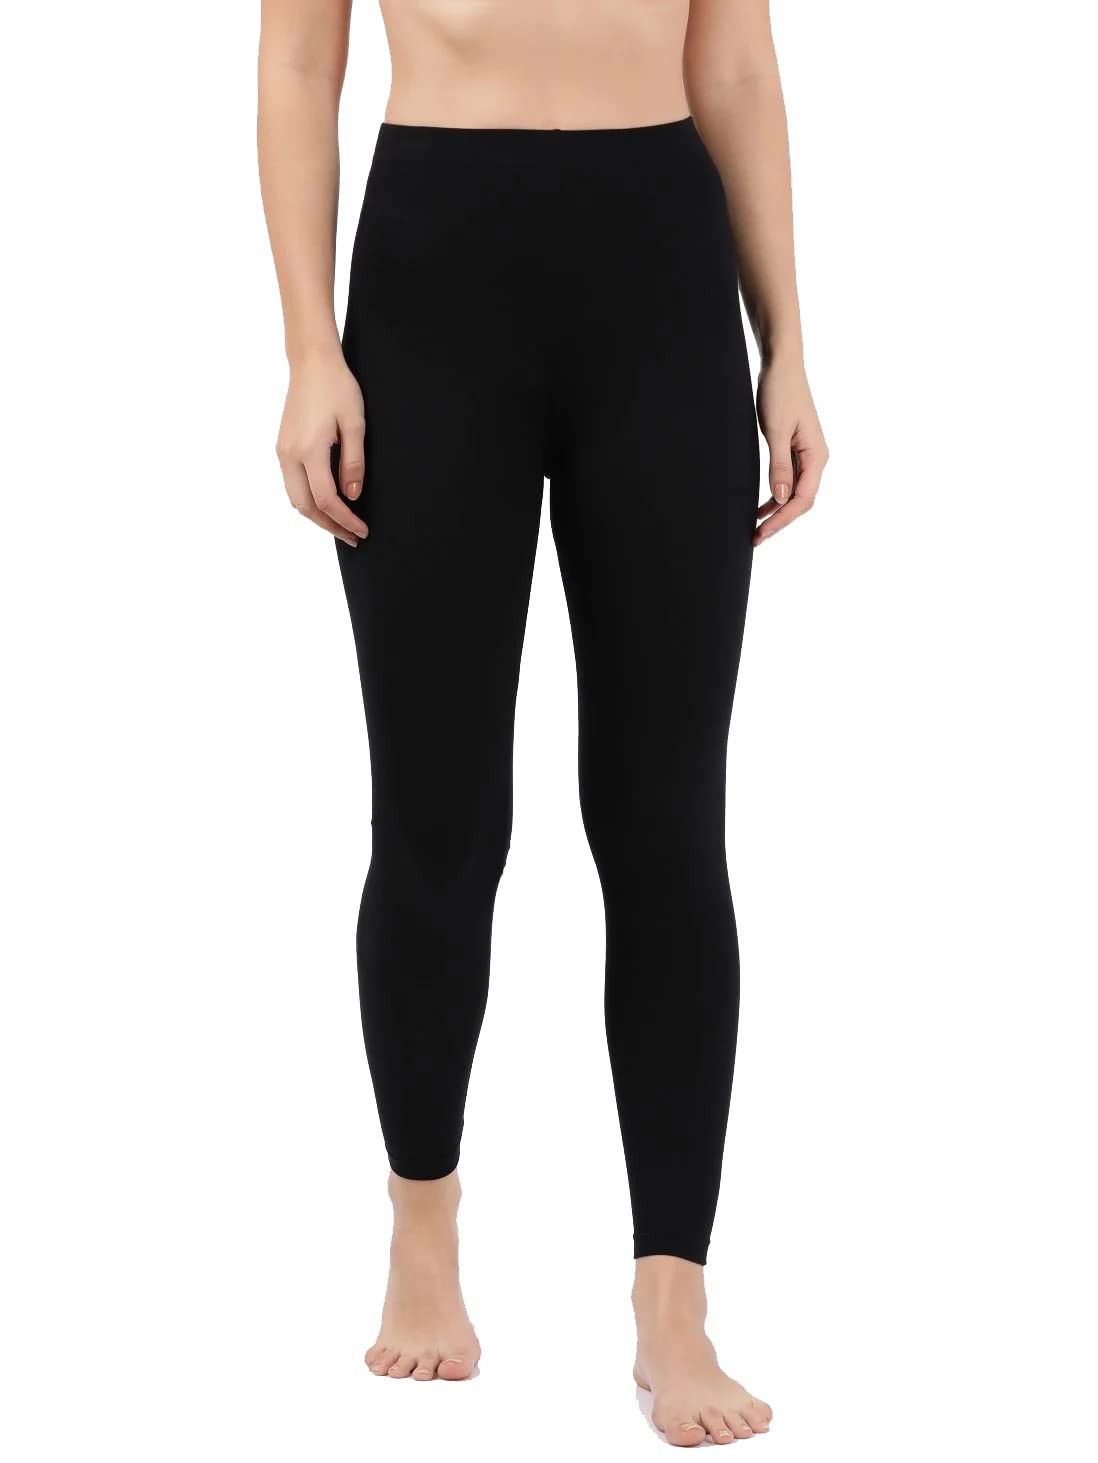 https://www.zebrs.com/uploads/zebrs/products/jockey-womenamp039s-slim-fit-cotton-blend-leggings-with-concealed-elastic-band-aw87blacksoff-whitessize-free-size-65209973114229_l.jpg